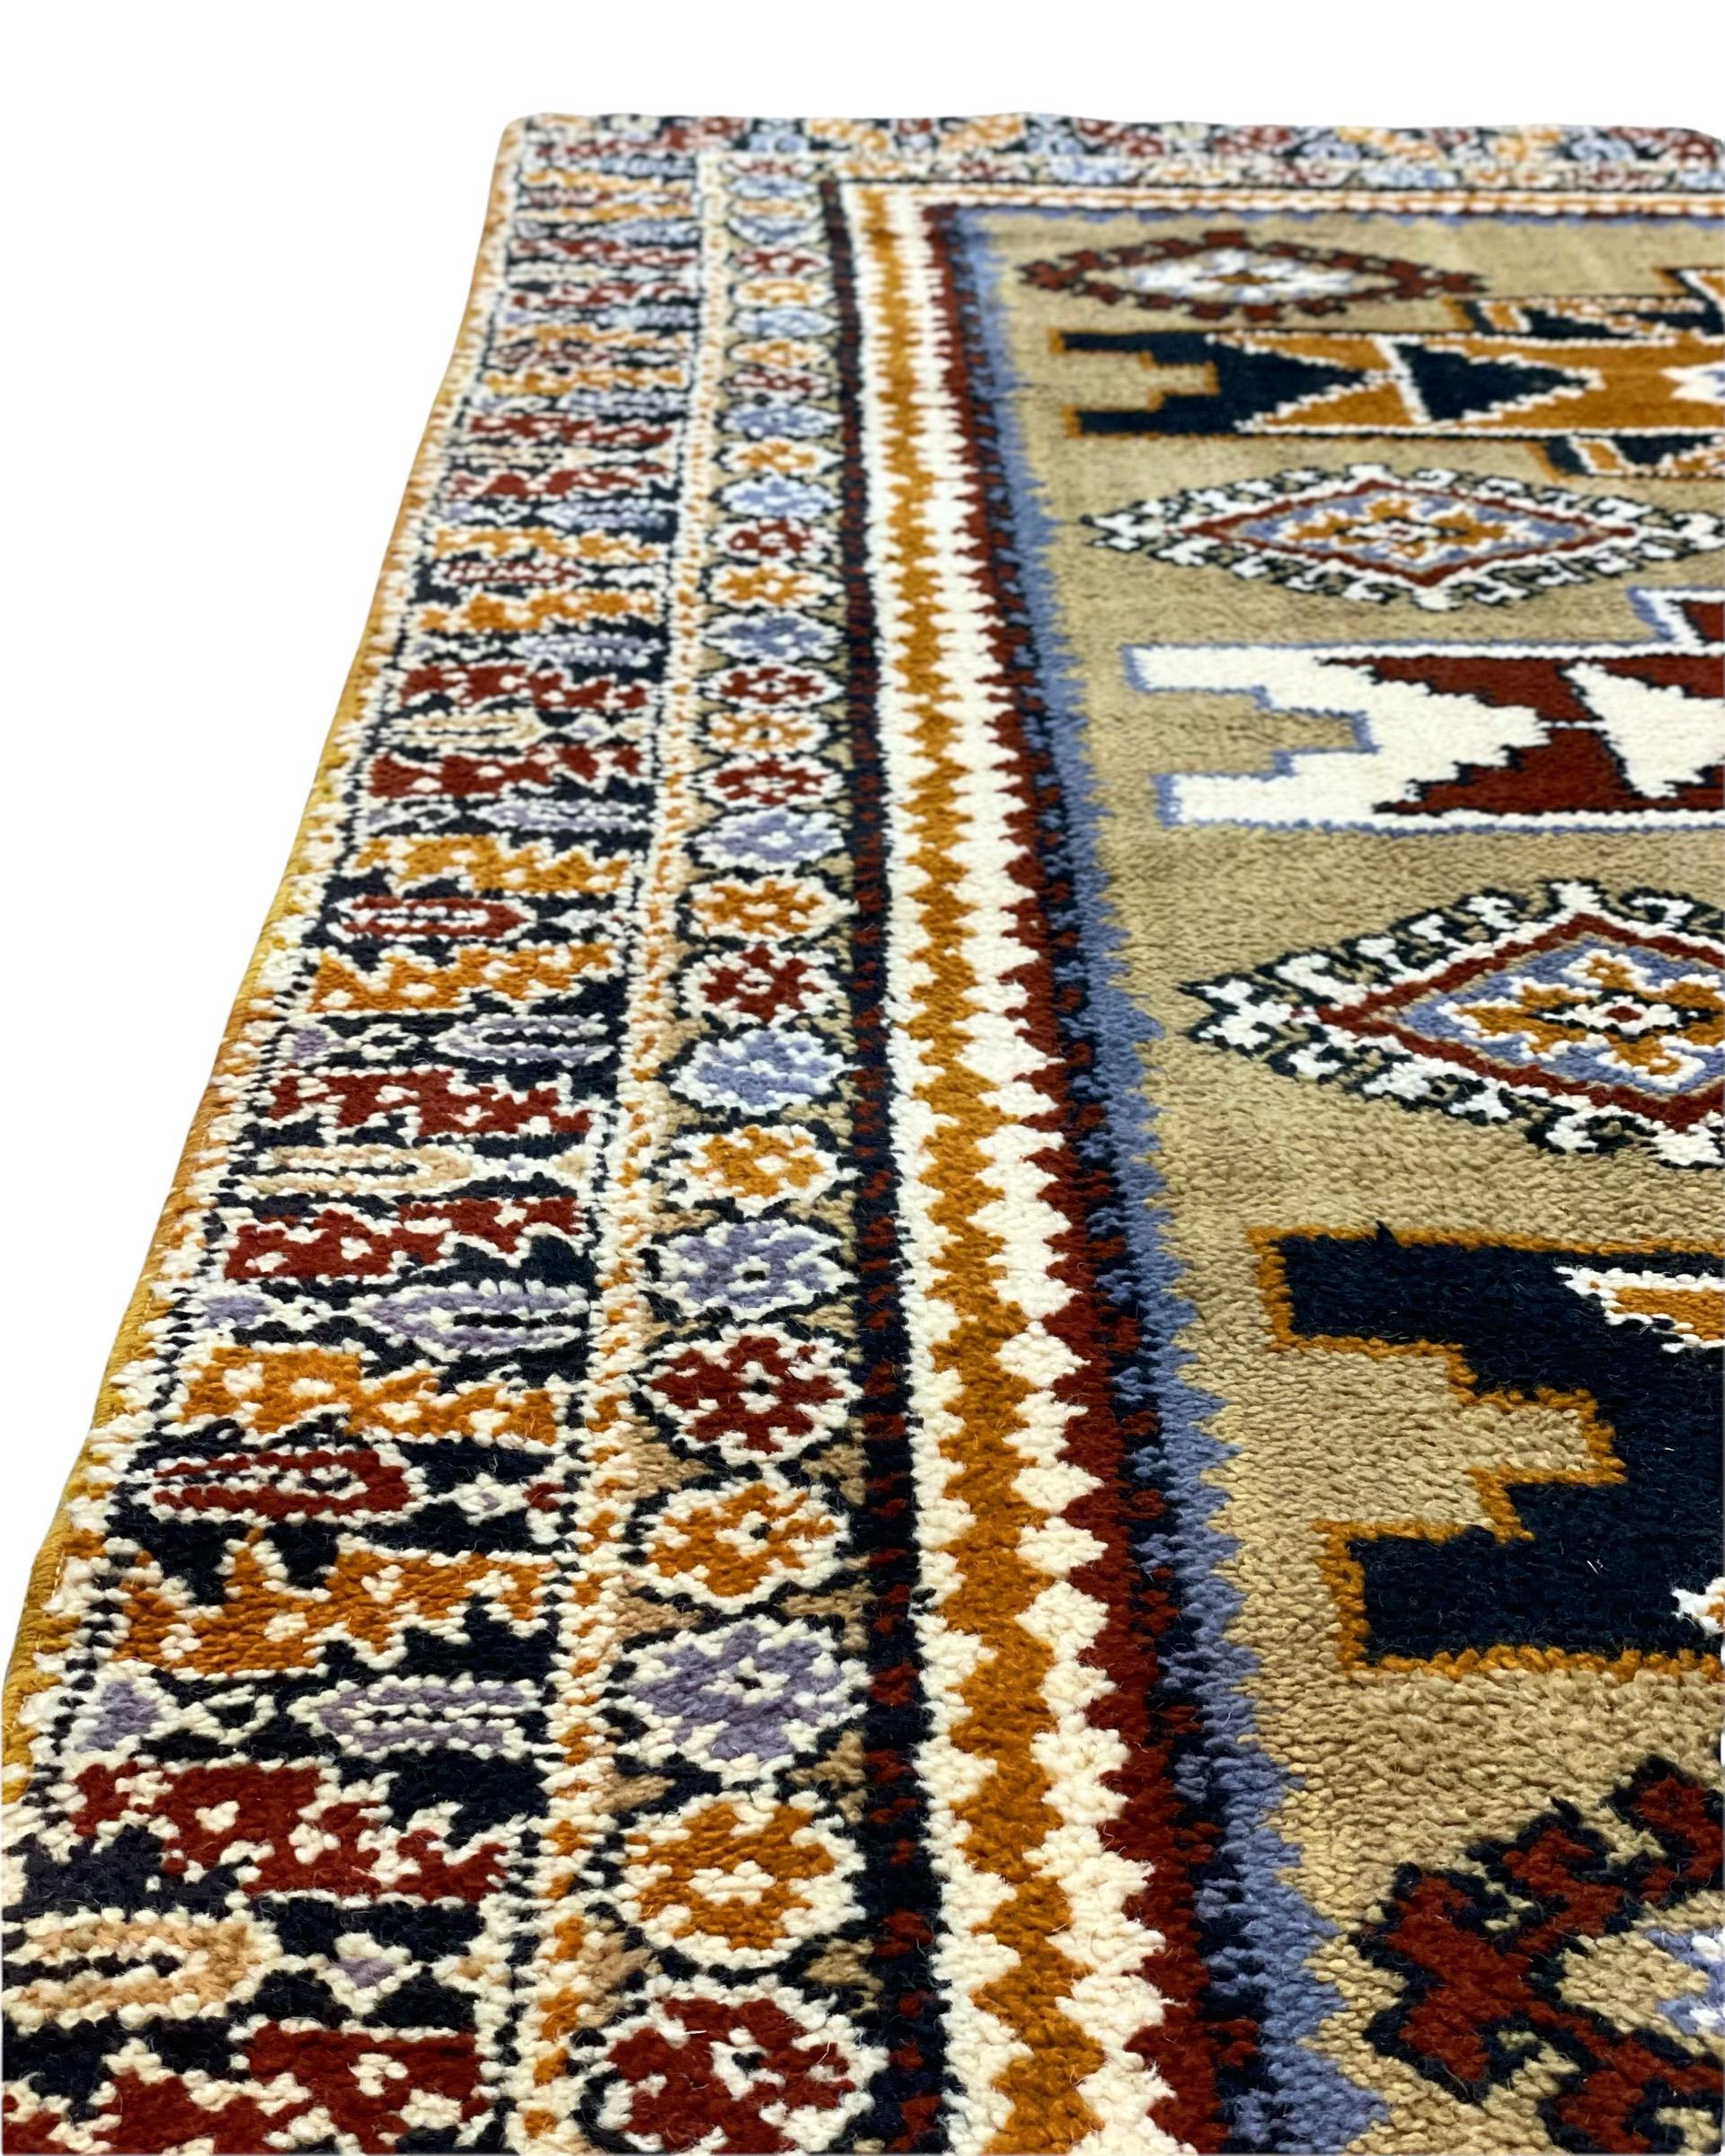 Amazing mid century modern wool area rug designed by John Freeman for Concepts International 